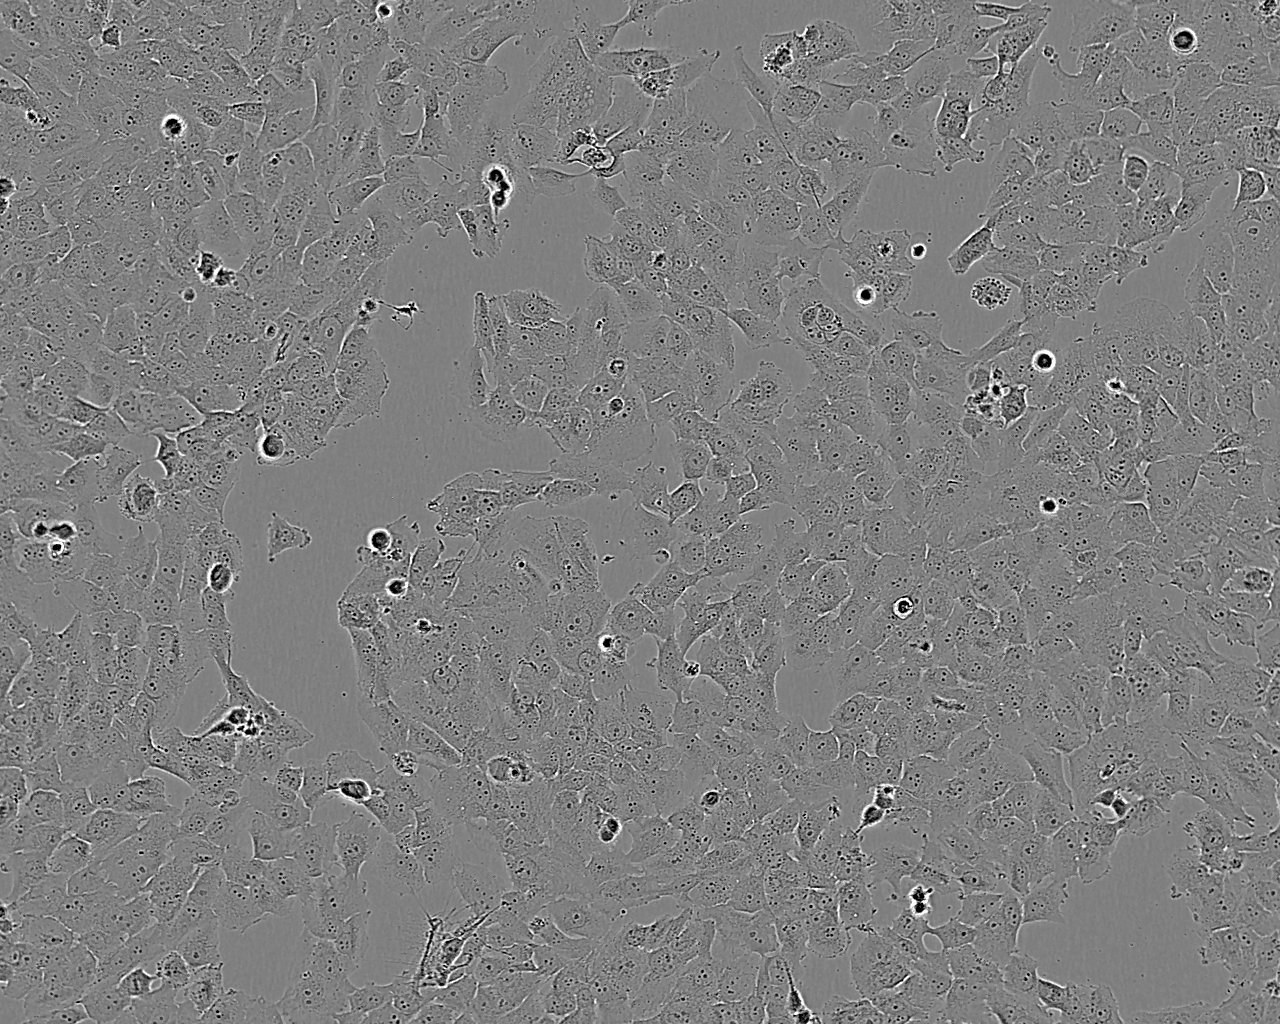 H9c2(2-1) Cell:大鼠胚胎心肌细胞系,H9c2(2-1) Cell